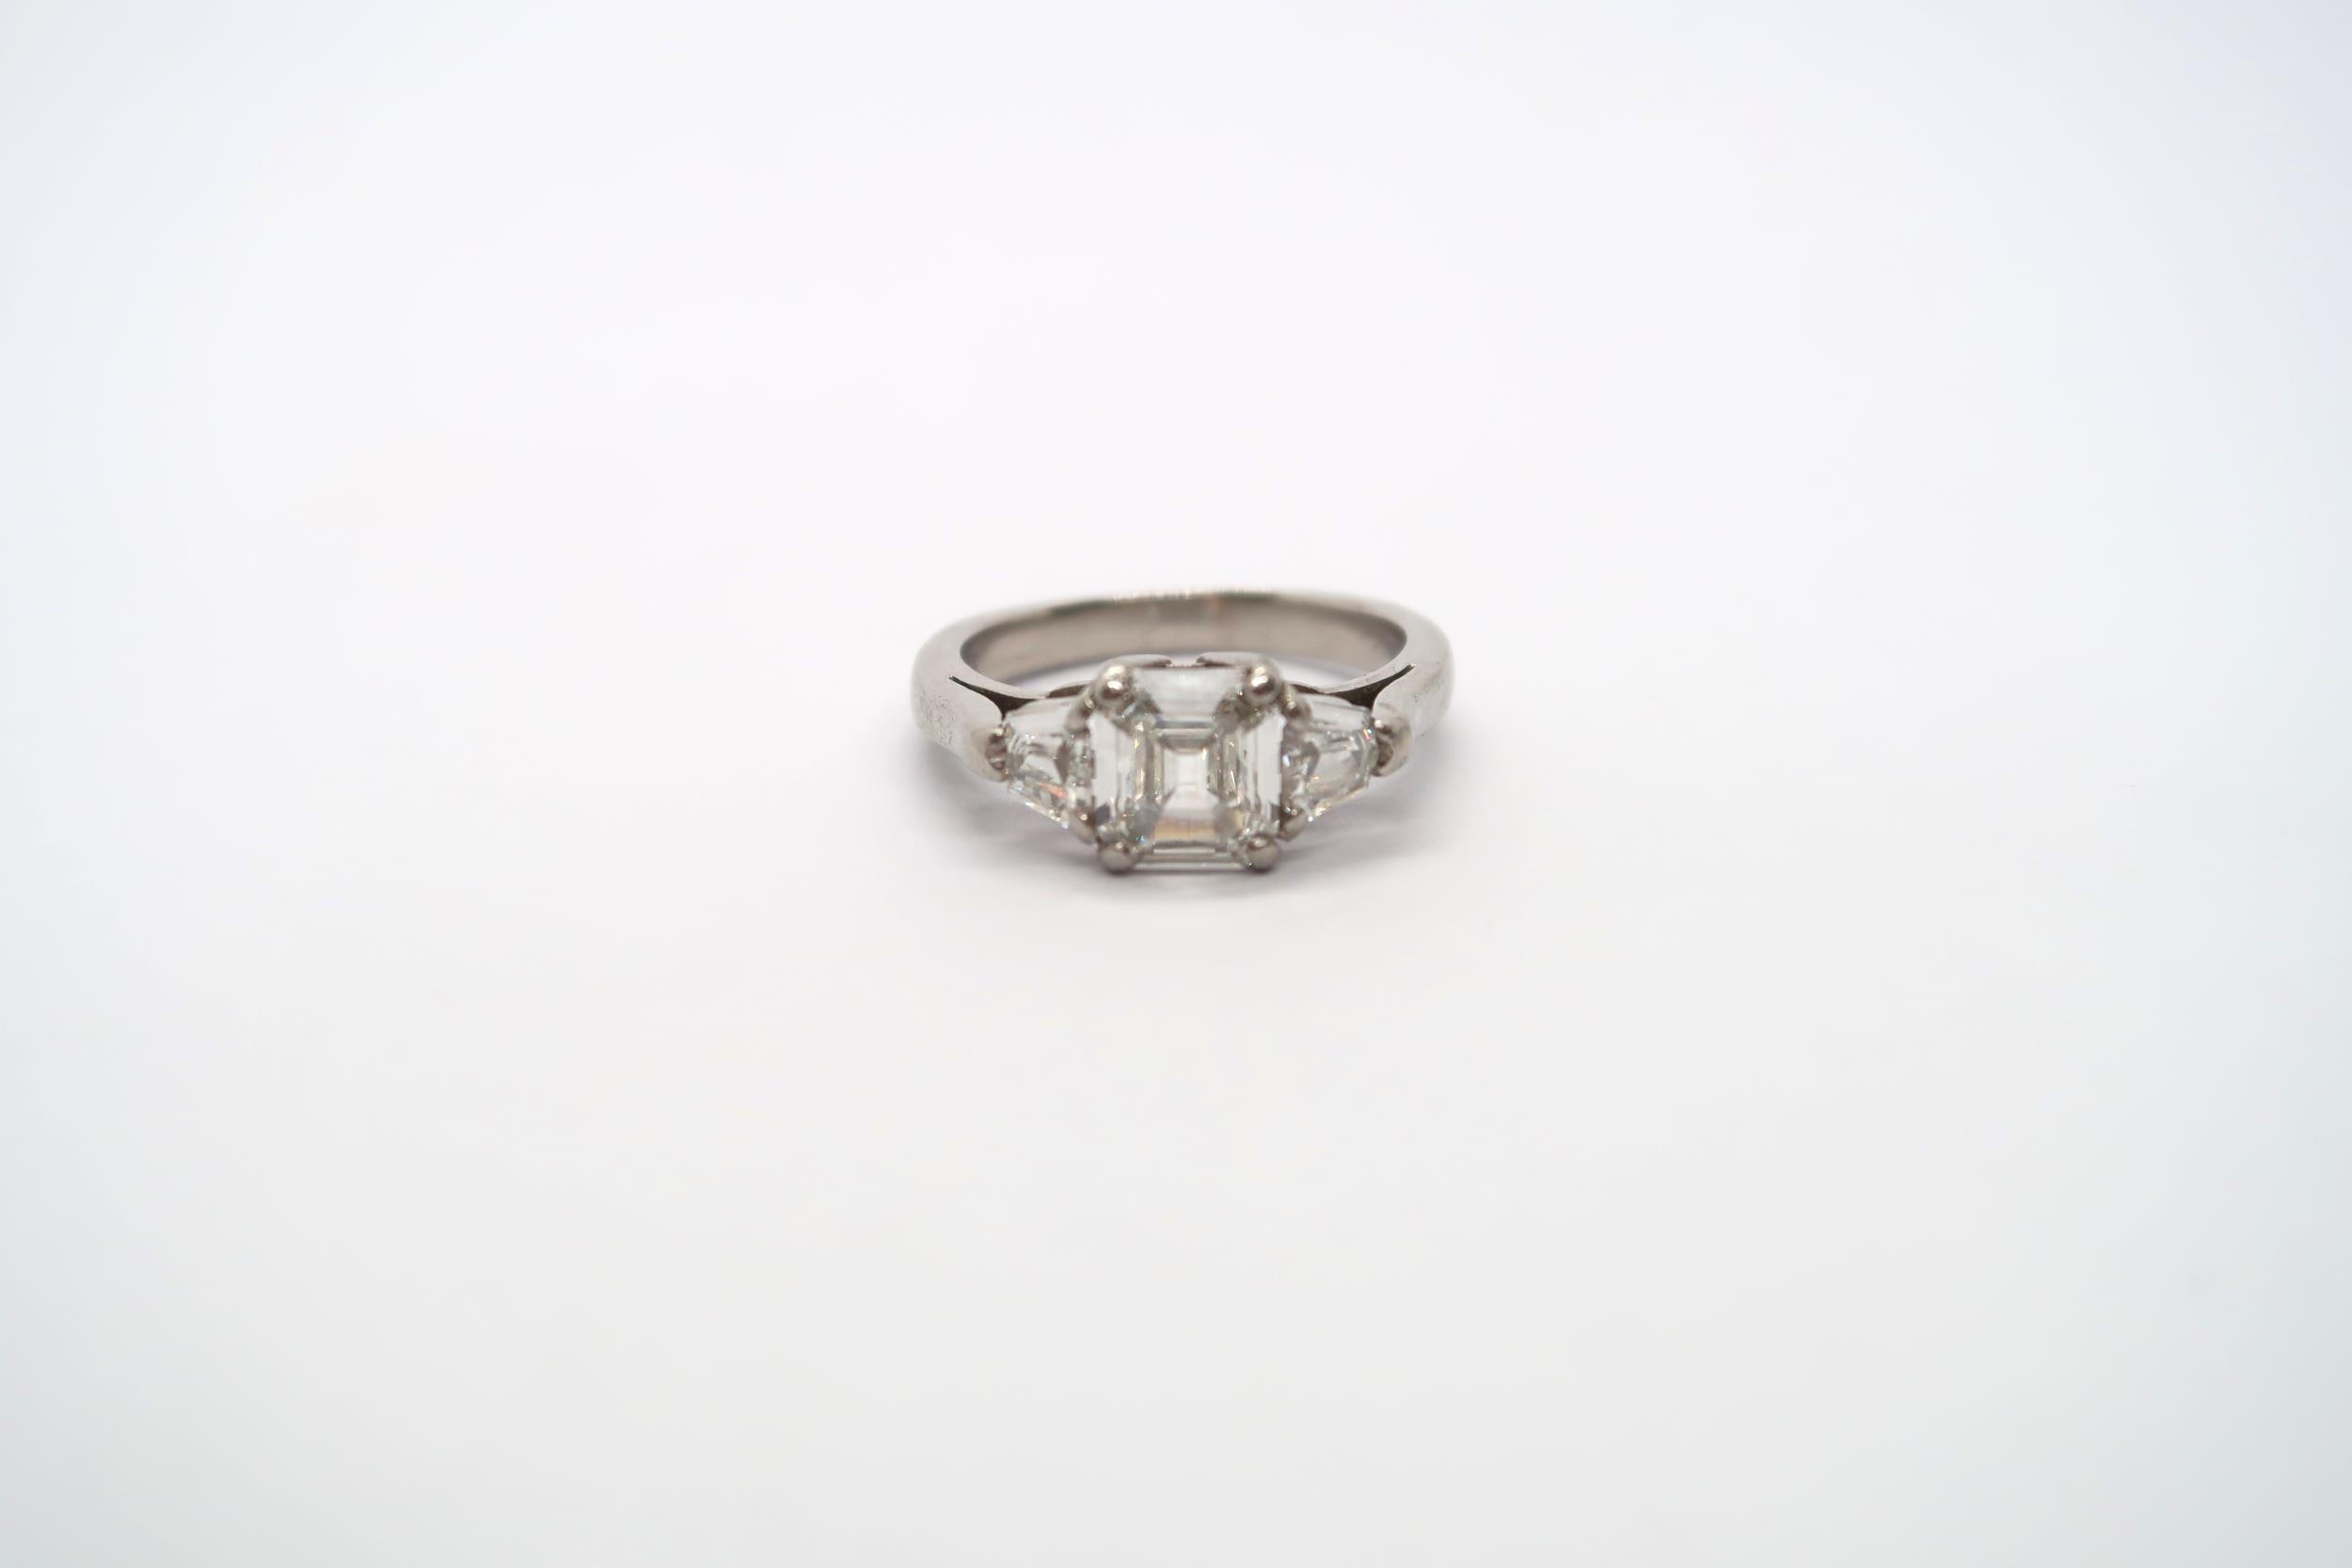 A very good platinum three stone diamond ring - The square emerald cut diamond estimated 1.1ct - Image 8 of 11